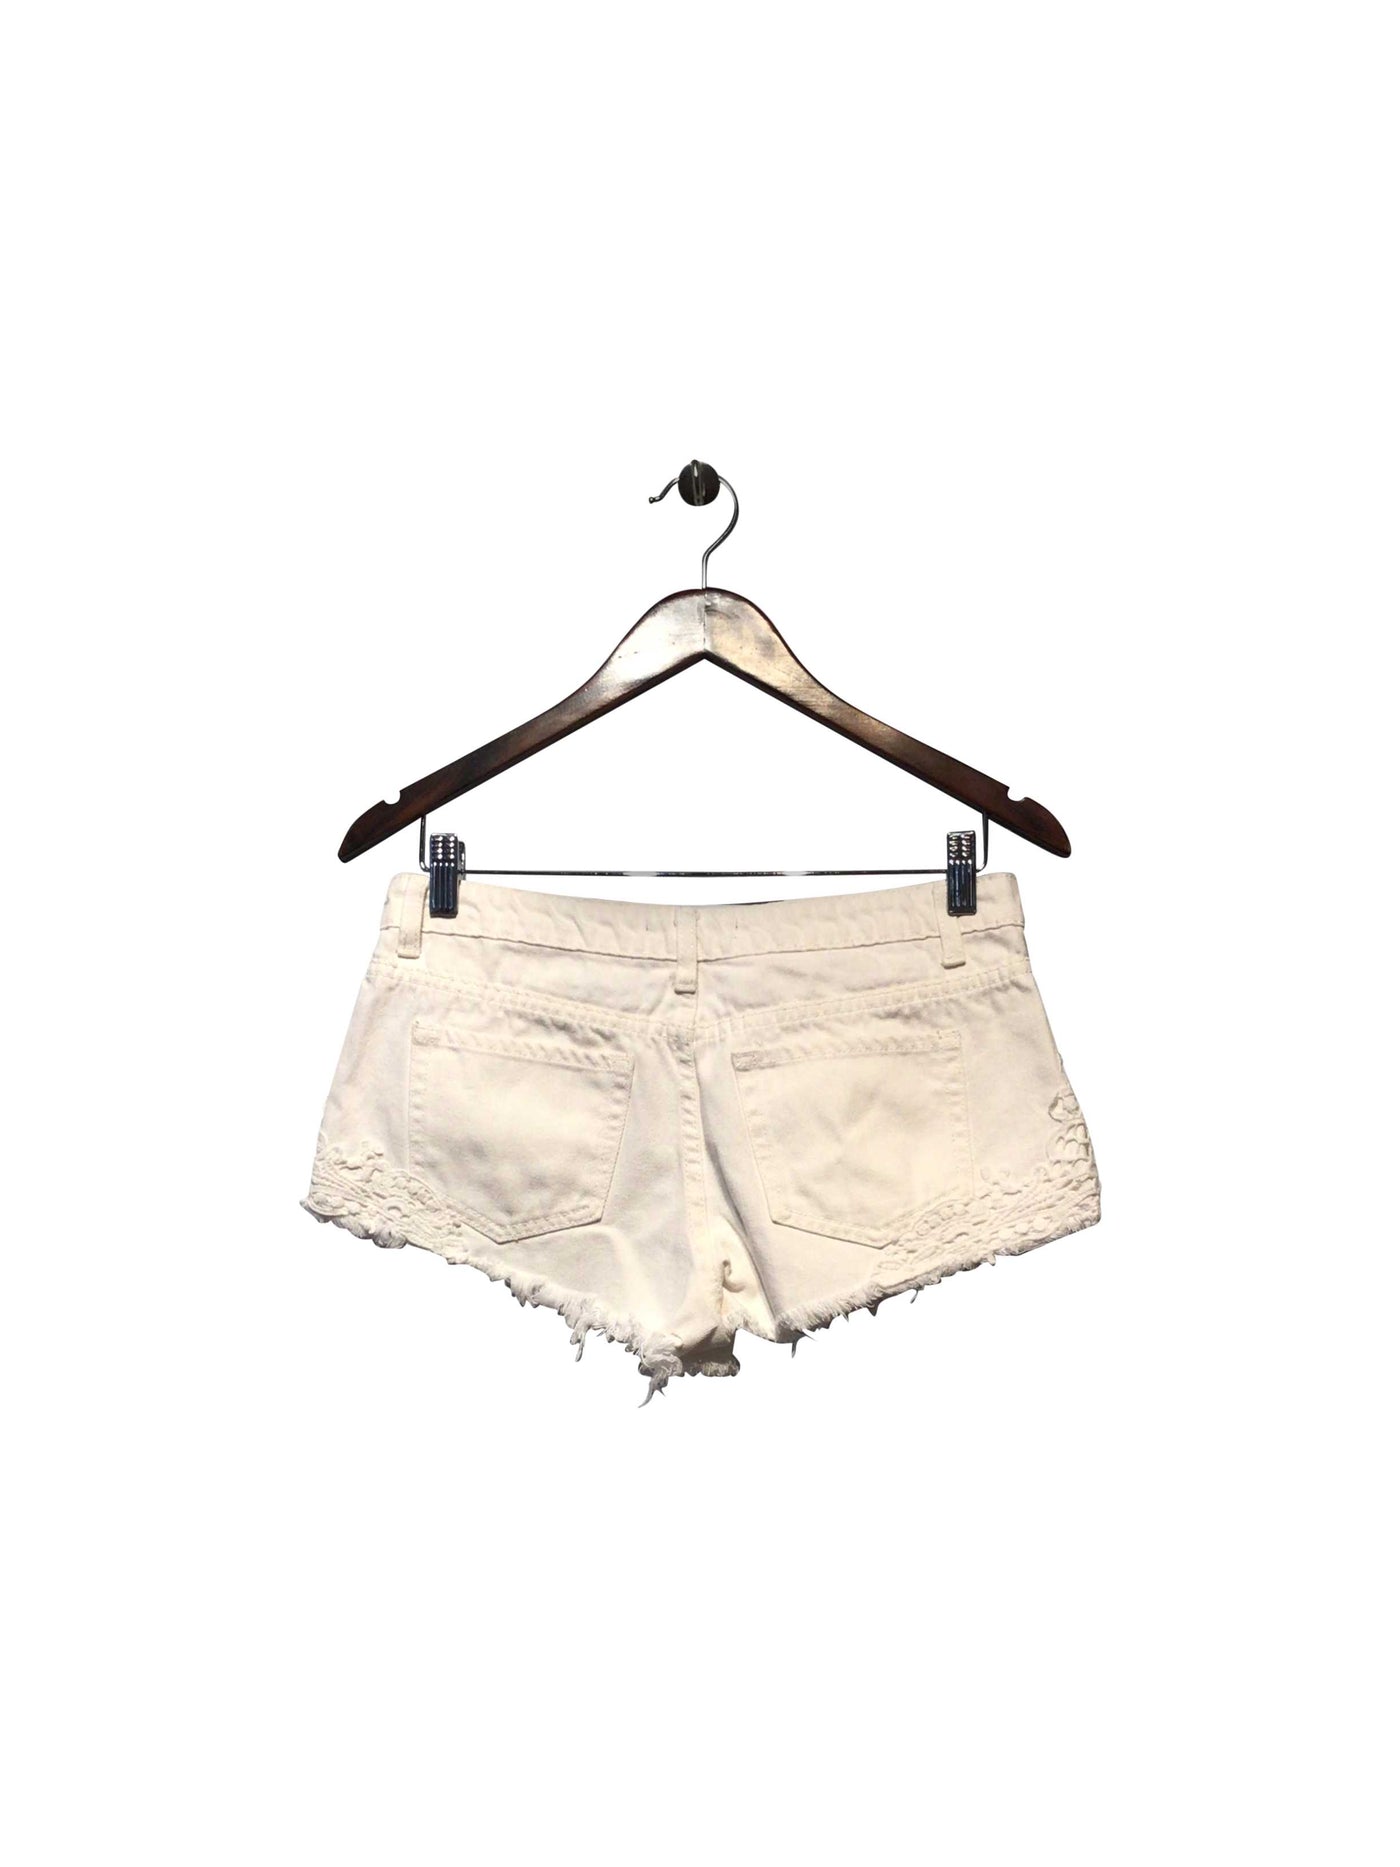 FOREVER 21 Regular fit Jean Shorts in White  -  27  7.99 Koop